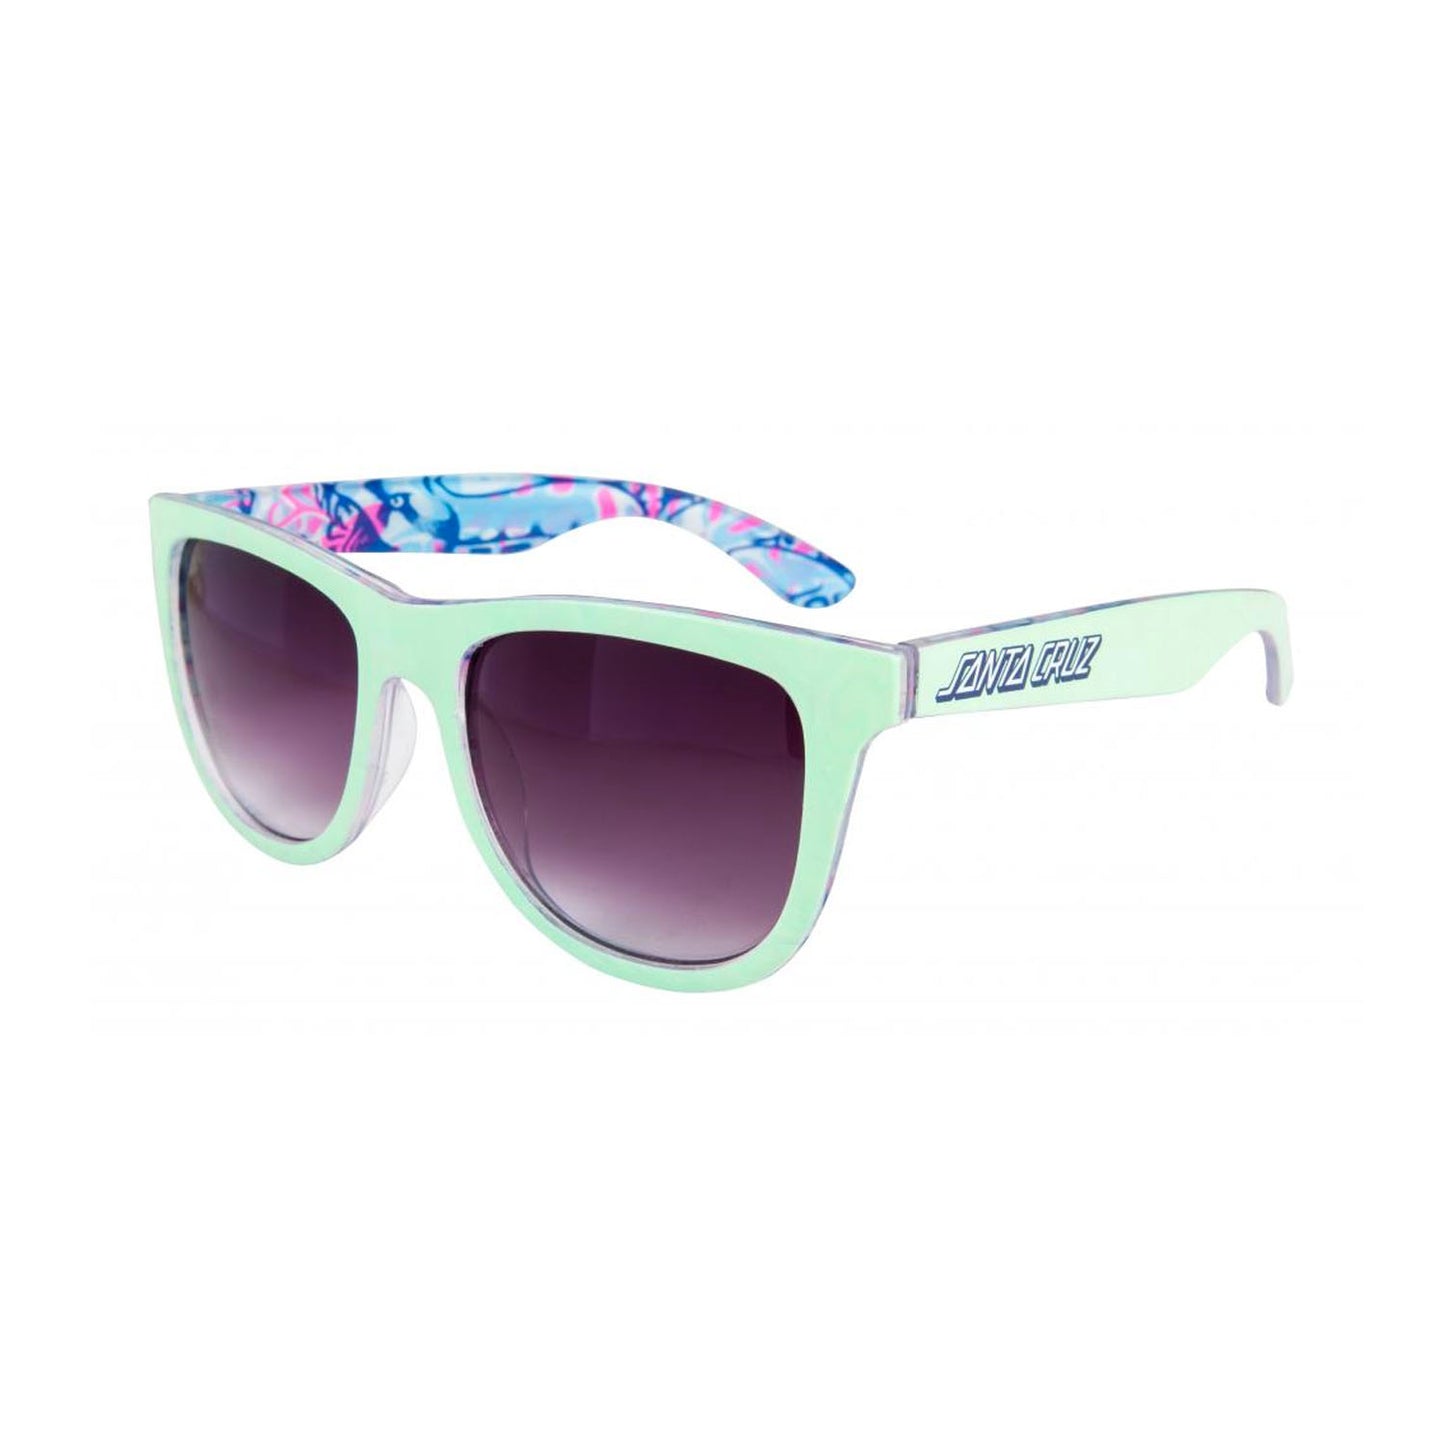 Santa Cruz Kendall Snake Sunglasses - mint/printed - Prime Delux Store